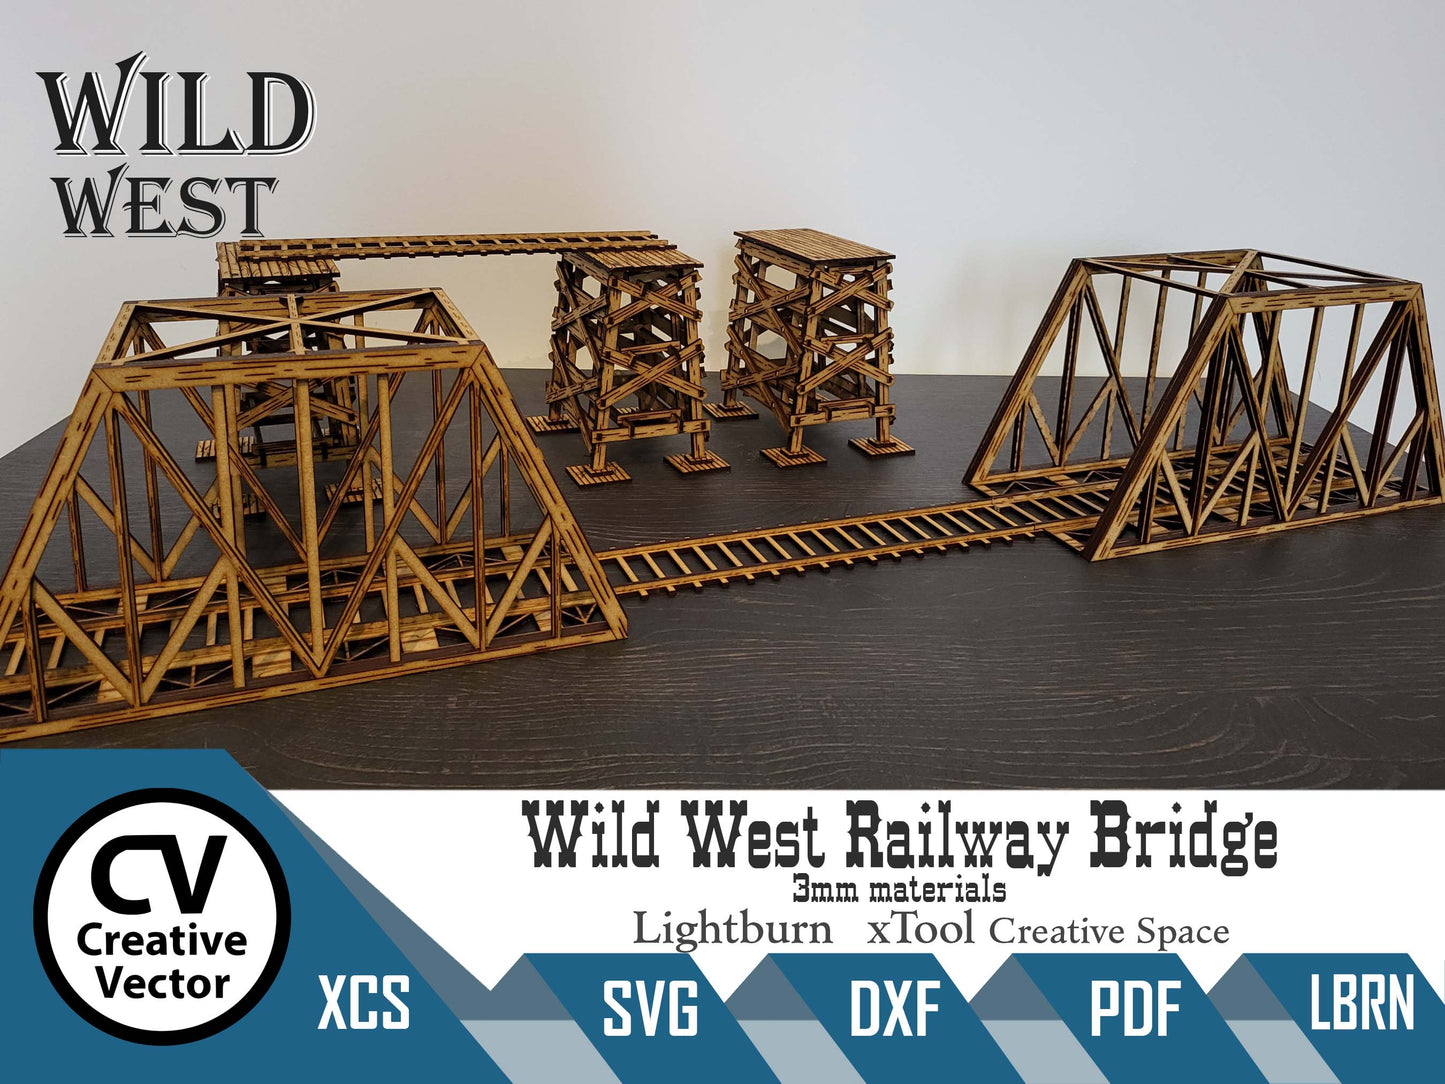 Wild West Railway Bridge  in scale 28mm for Wargamers